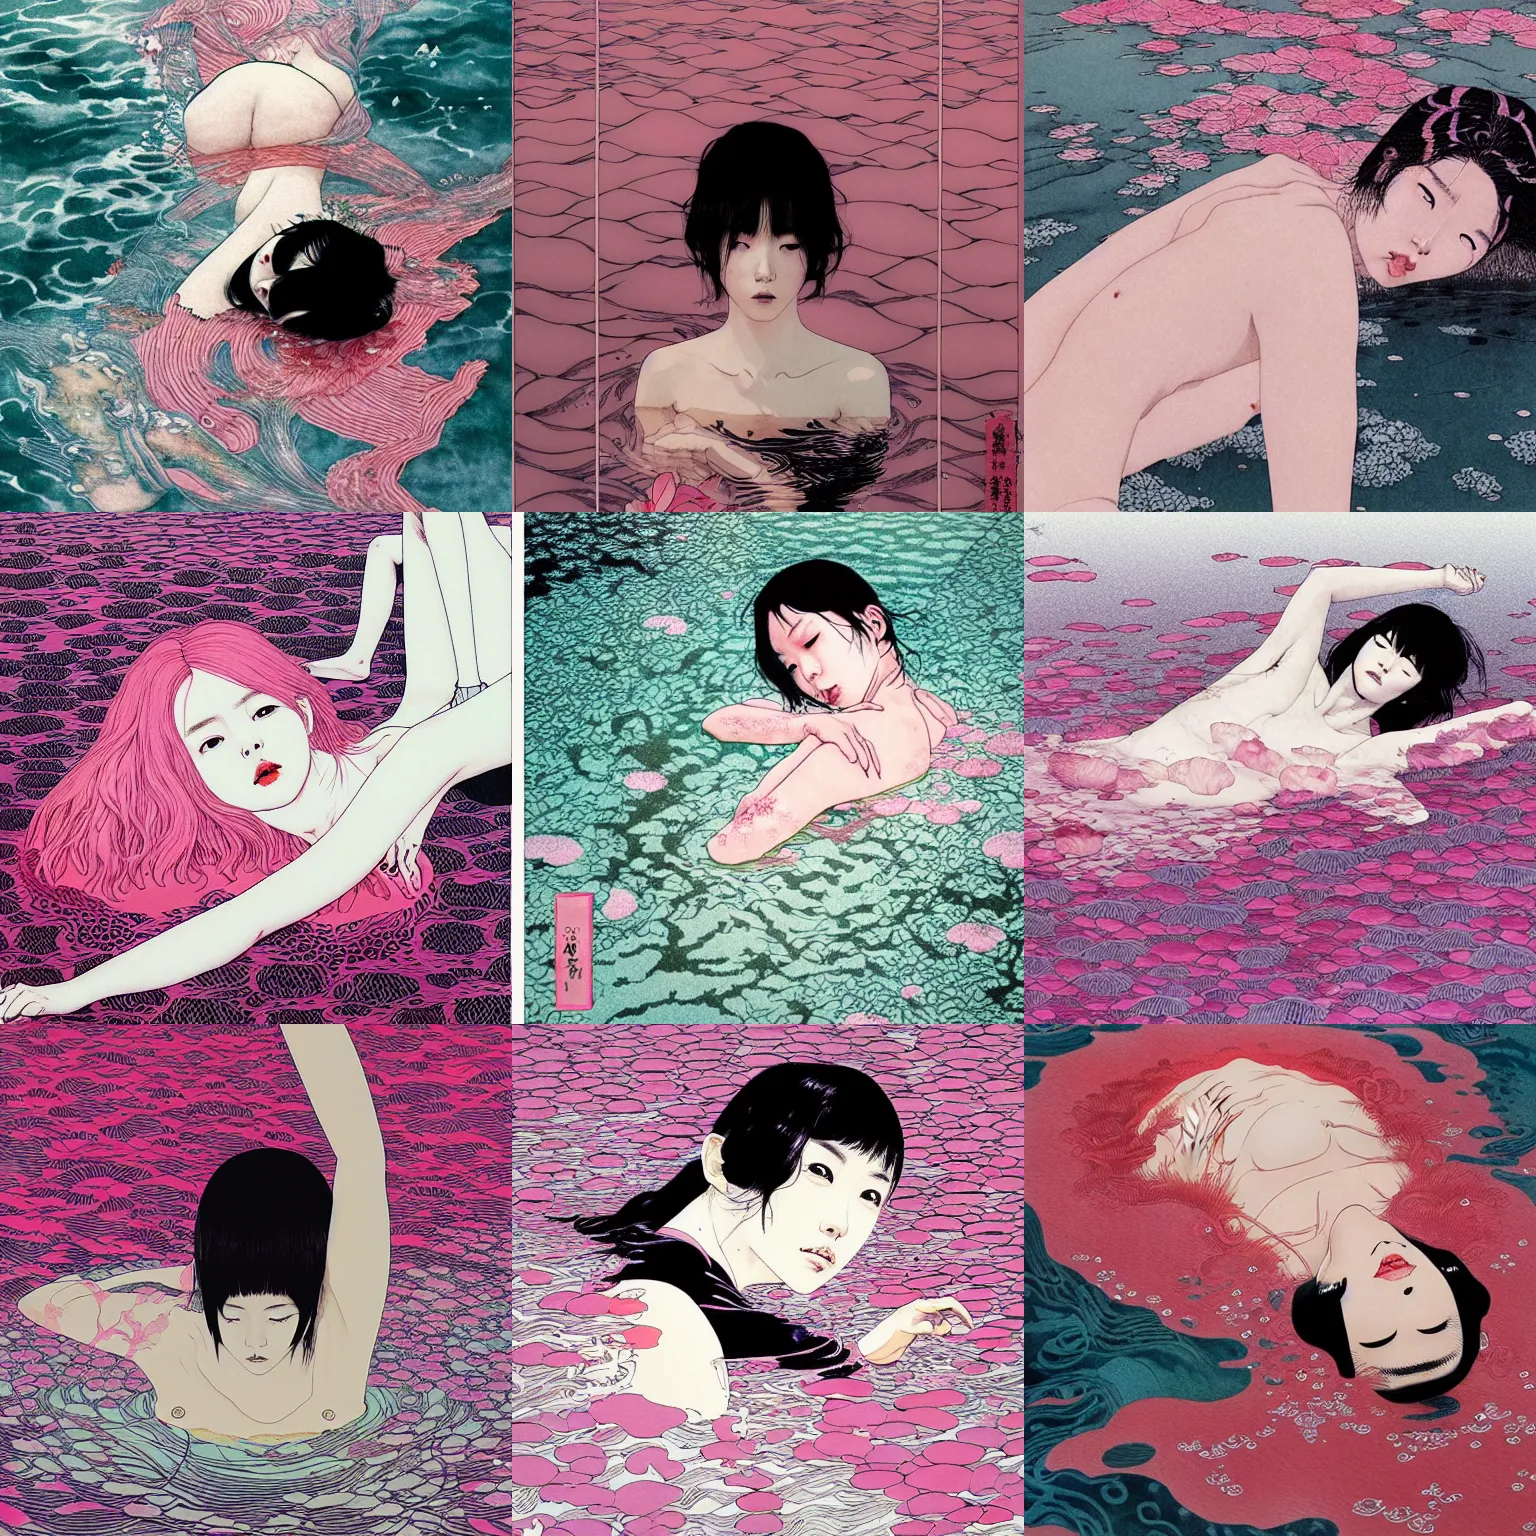 Prompt: lee jin - eun submerged in pink pool by takato yamamoto, conrad roset, m. k. kaluta, martine johanna, rule of thirds, seductive look, beautiful